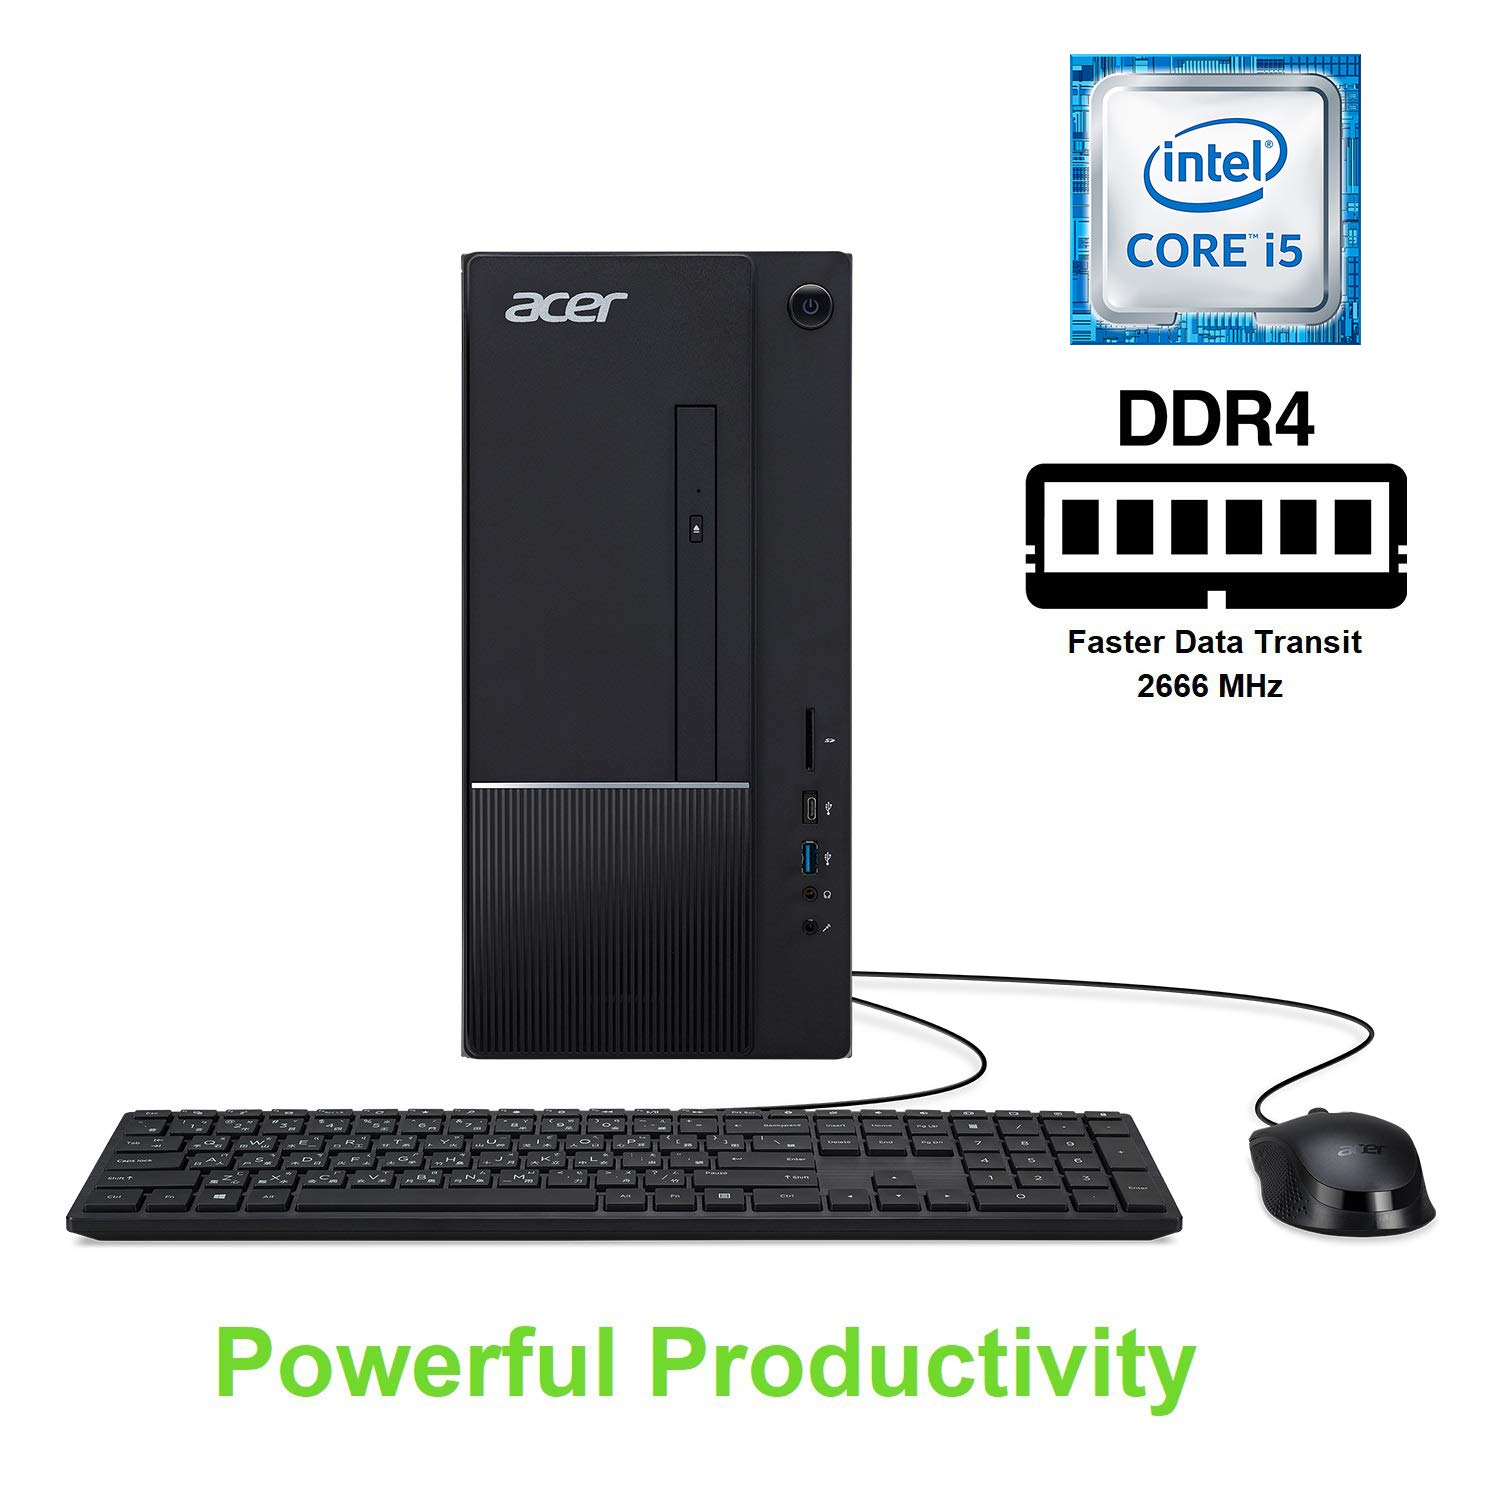 Acer Aspire TC-866-UR11 Desktop, 9th Gen Intel Core i5-9400 6-Core Processor, 8GB 2666MHz DDR4, 512GB SSD, 8X DVD, 802.11ac WiFi 5, USB 3.1 Type C, Windows 10 Home